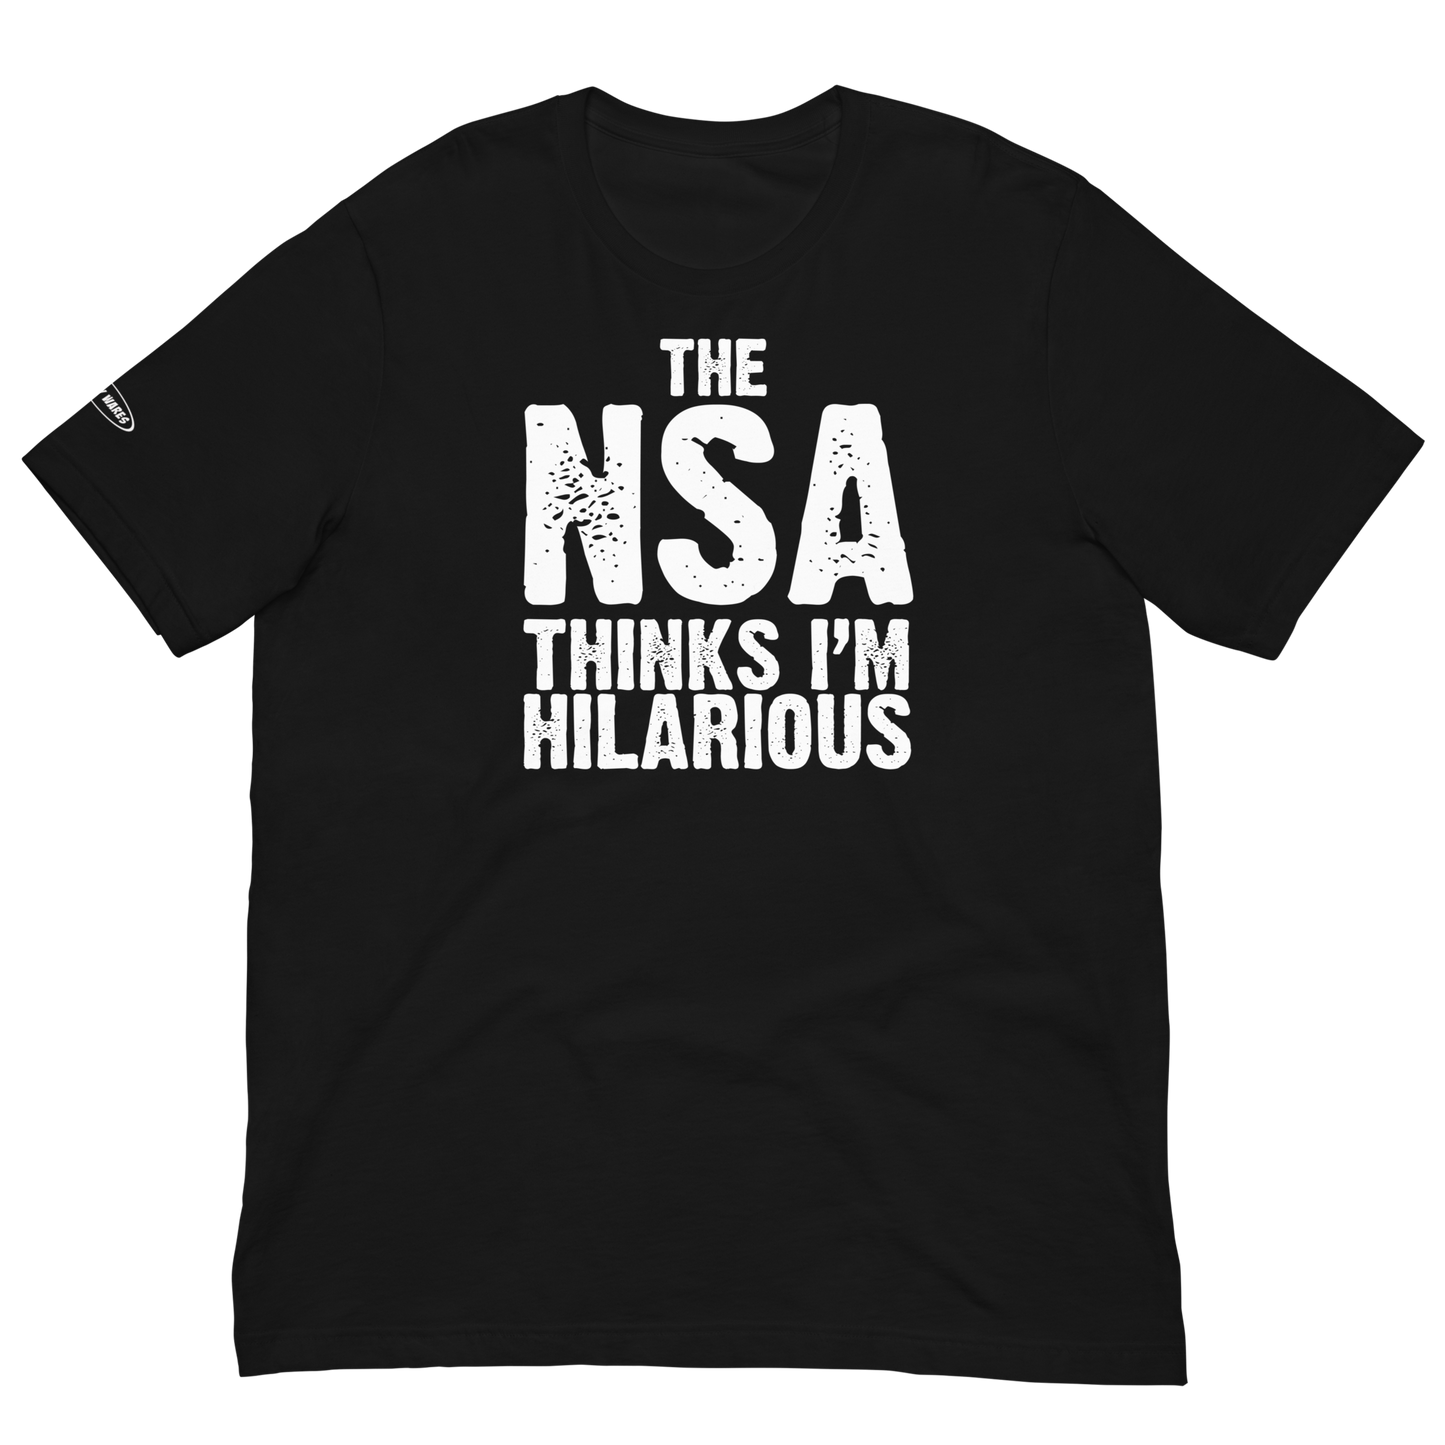 Unisex - The NSA thinks i'm hilarious - Funny T-shirt